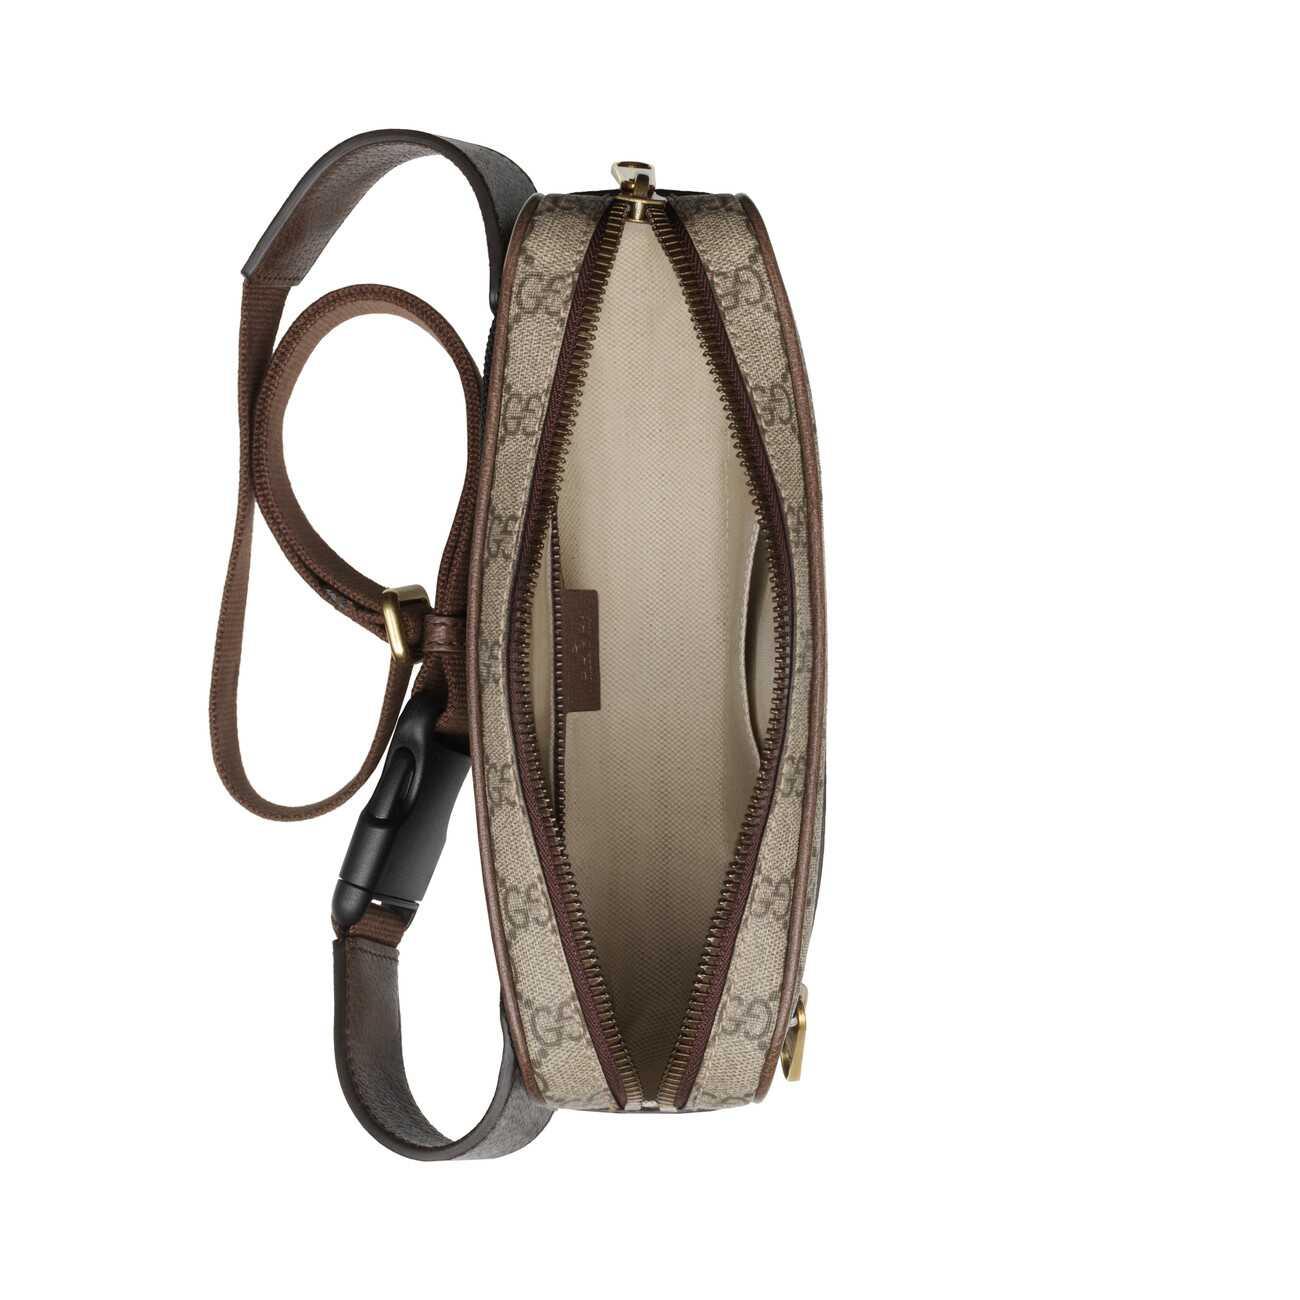 Gucci Ophidia GG Supreme Canvas Belt Bag in Beige (Natural) - Save 38% |  Lyst